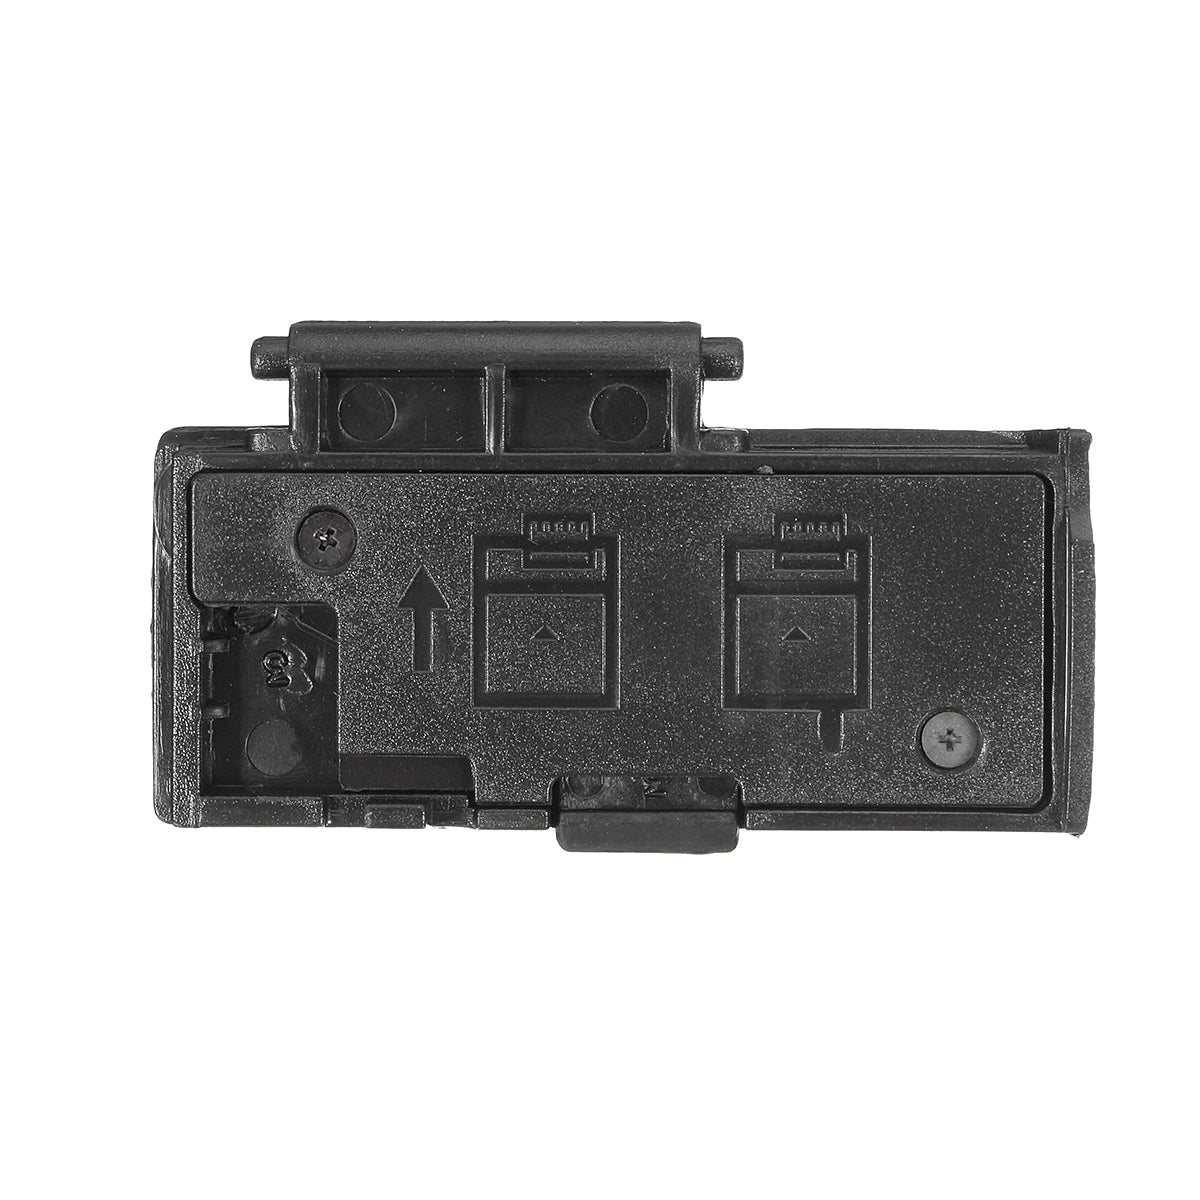 Battery Door Cover Lid Cap Repair Replacement Part Plastic For Canon EOS 550D